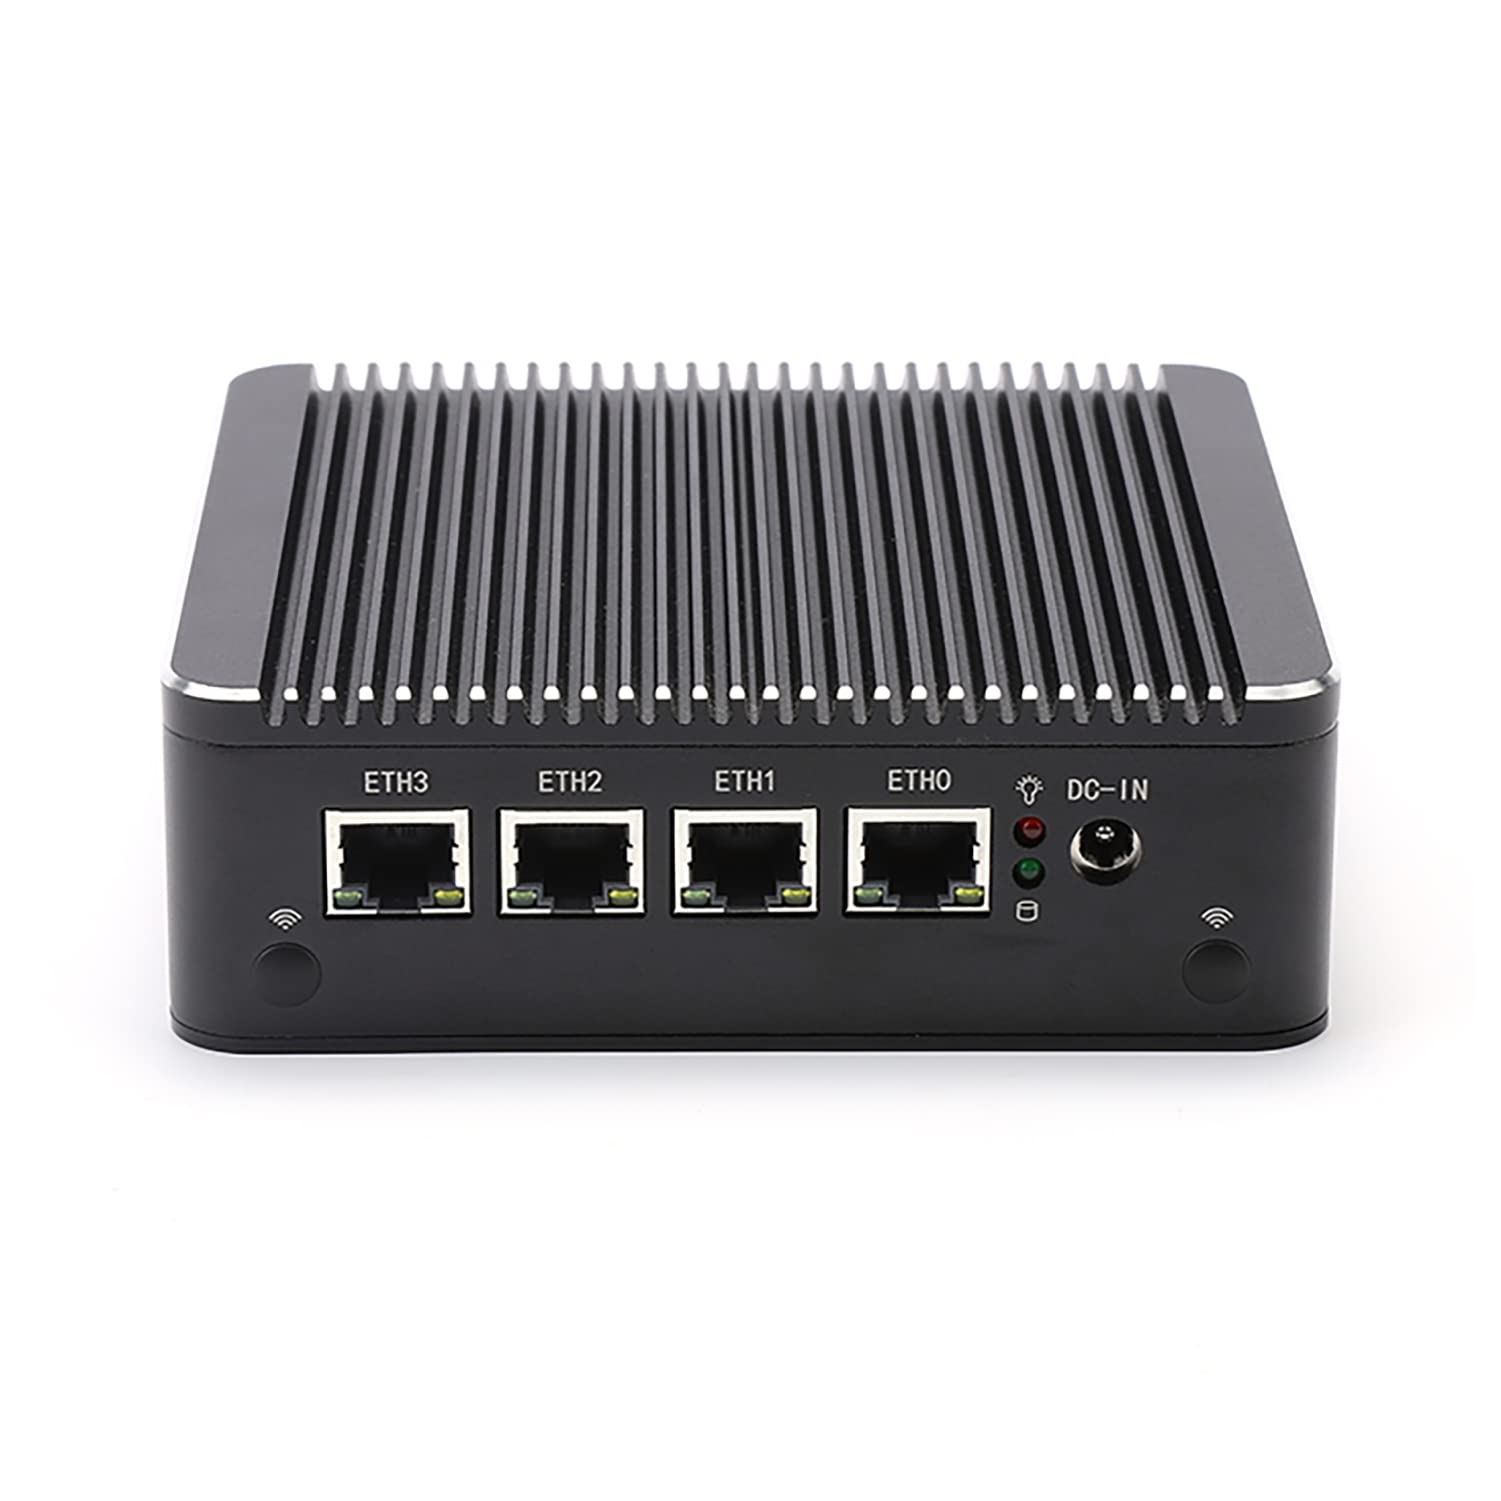 HUNSN Micro Firewall Appliance, OPNsense, VPN, Router PC, Intel Celeron J4125, RS34g, AES-NI, 4 x Intel 2.5GbE I225-V LAN, 2 x USB3.0, VGA, HDMI, Fanless, 16G RAM, 64G SSD